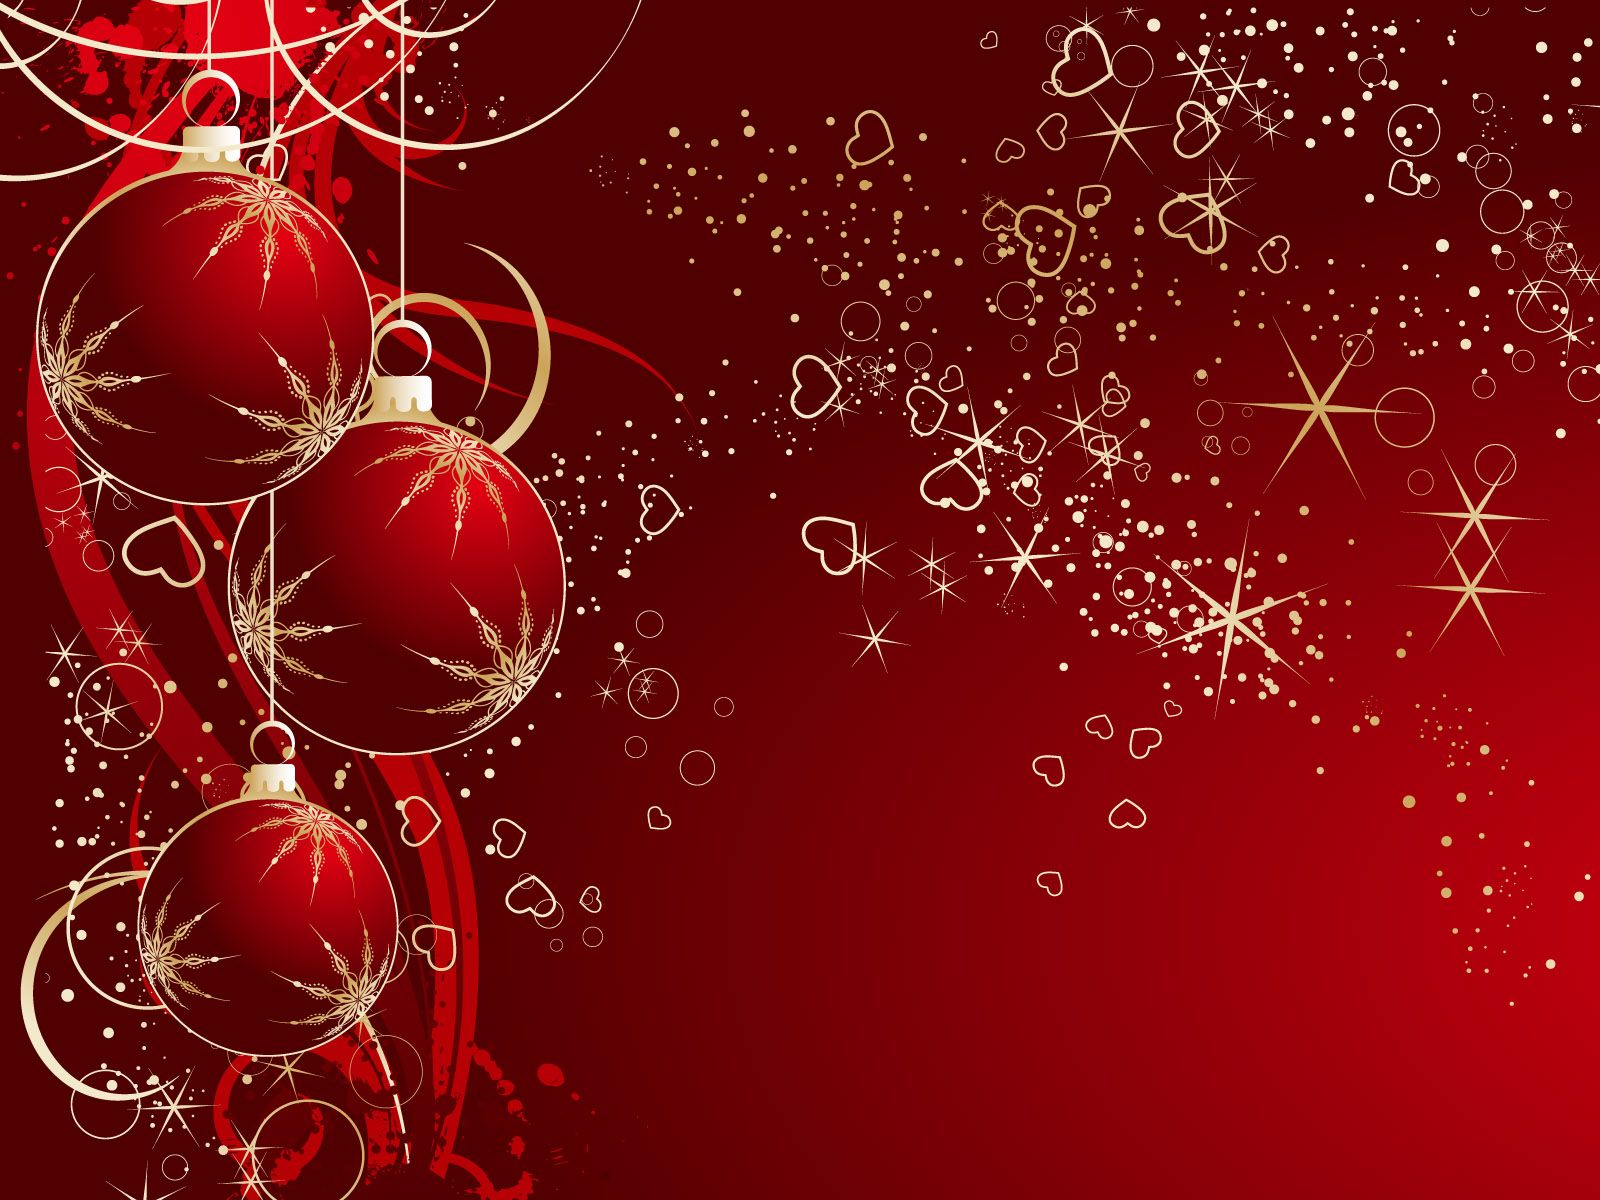 Free-Christmas-Backgrounds-Free-For-Desktop.jpg